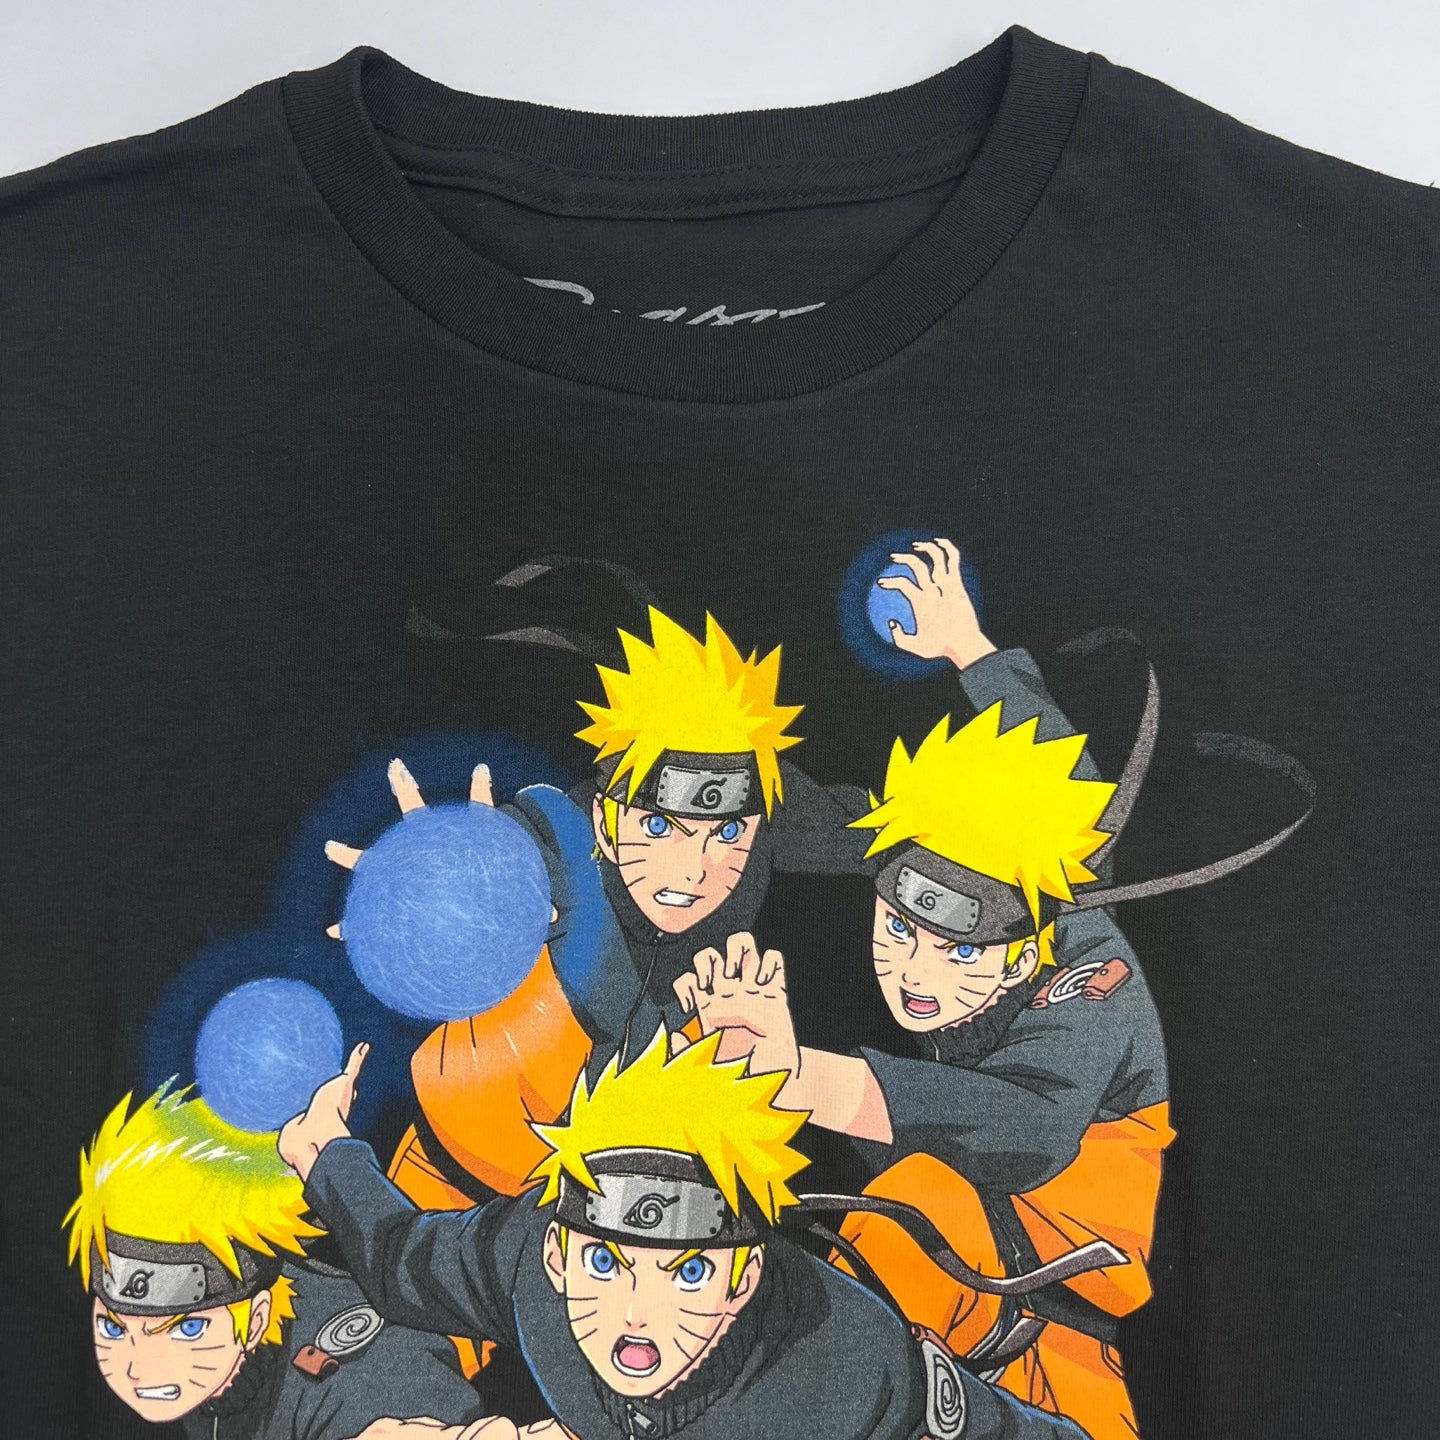 REASON CLOTHING Naruto Shippuden T-Shirt